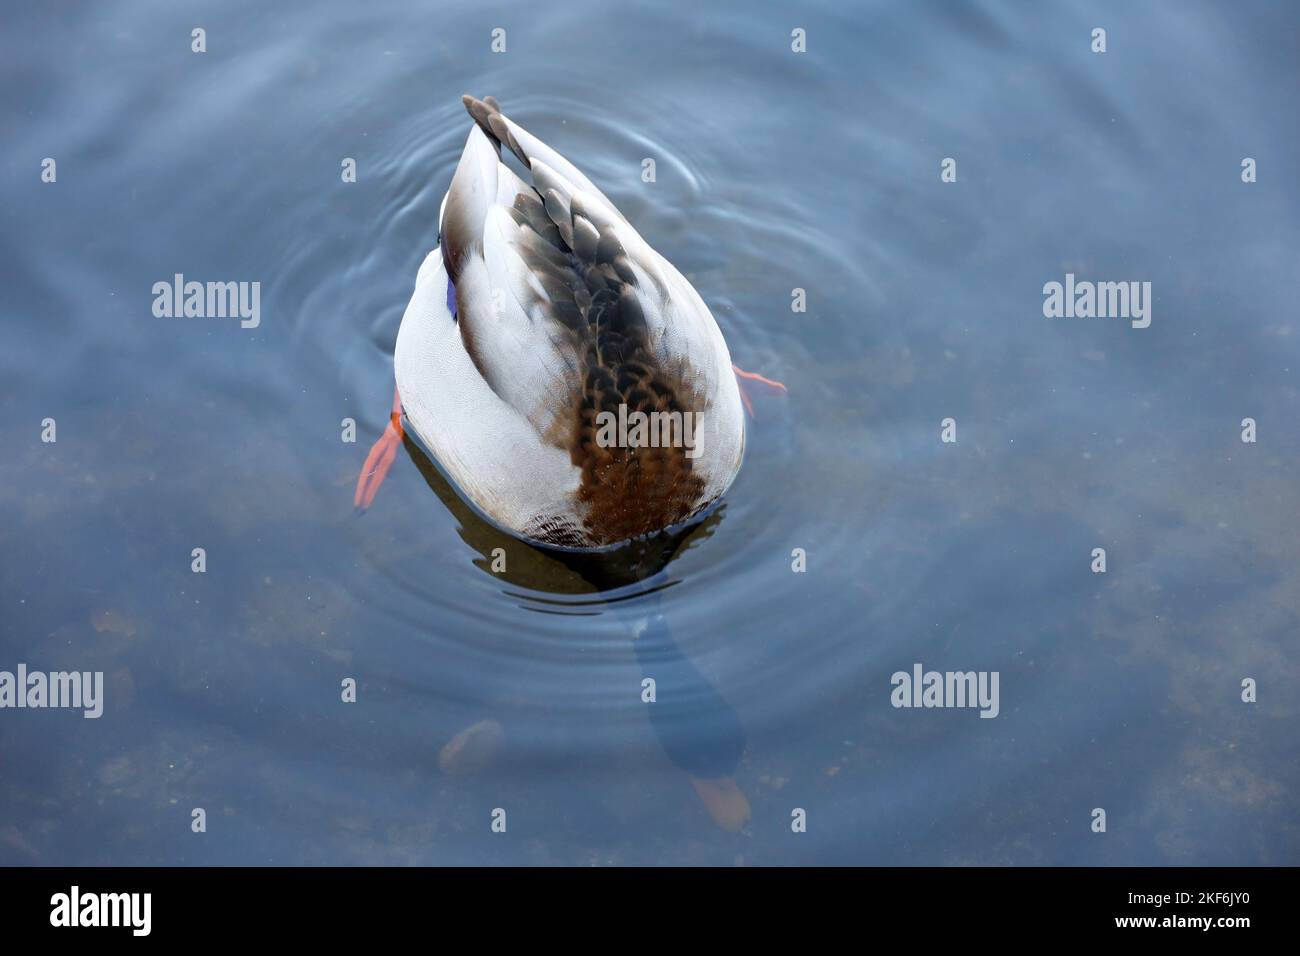 Mallard duck diving into water. Male wild duck feeding on winter lake Stock Photo